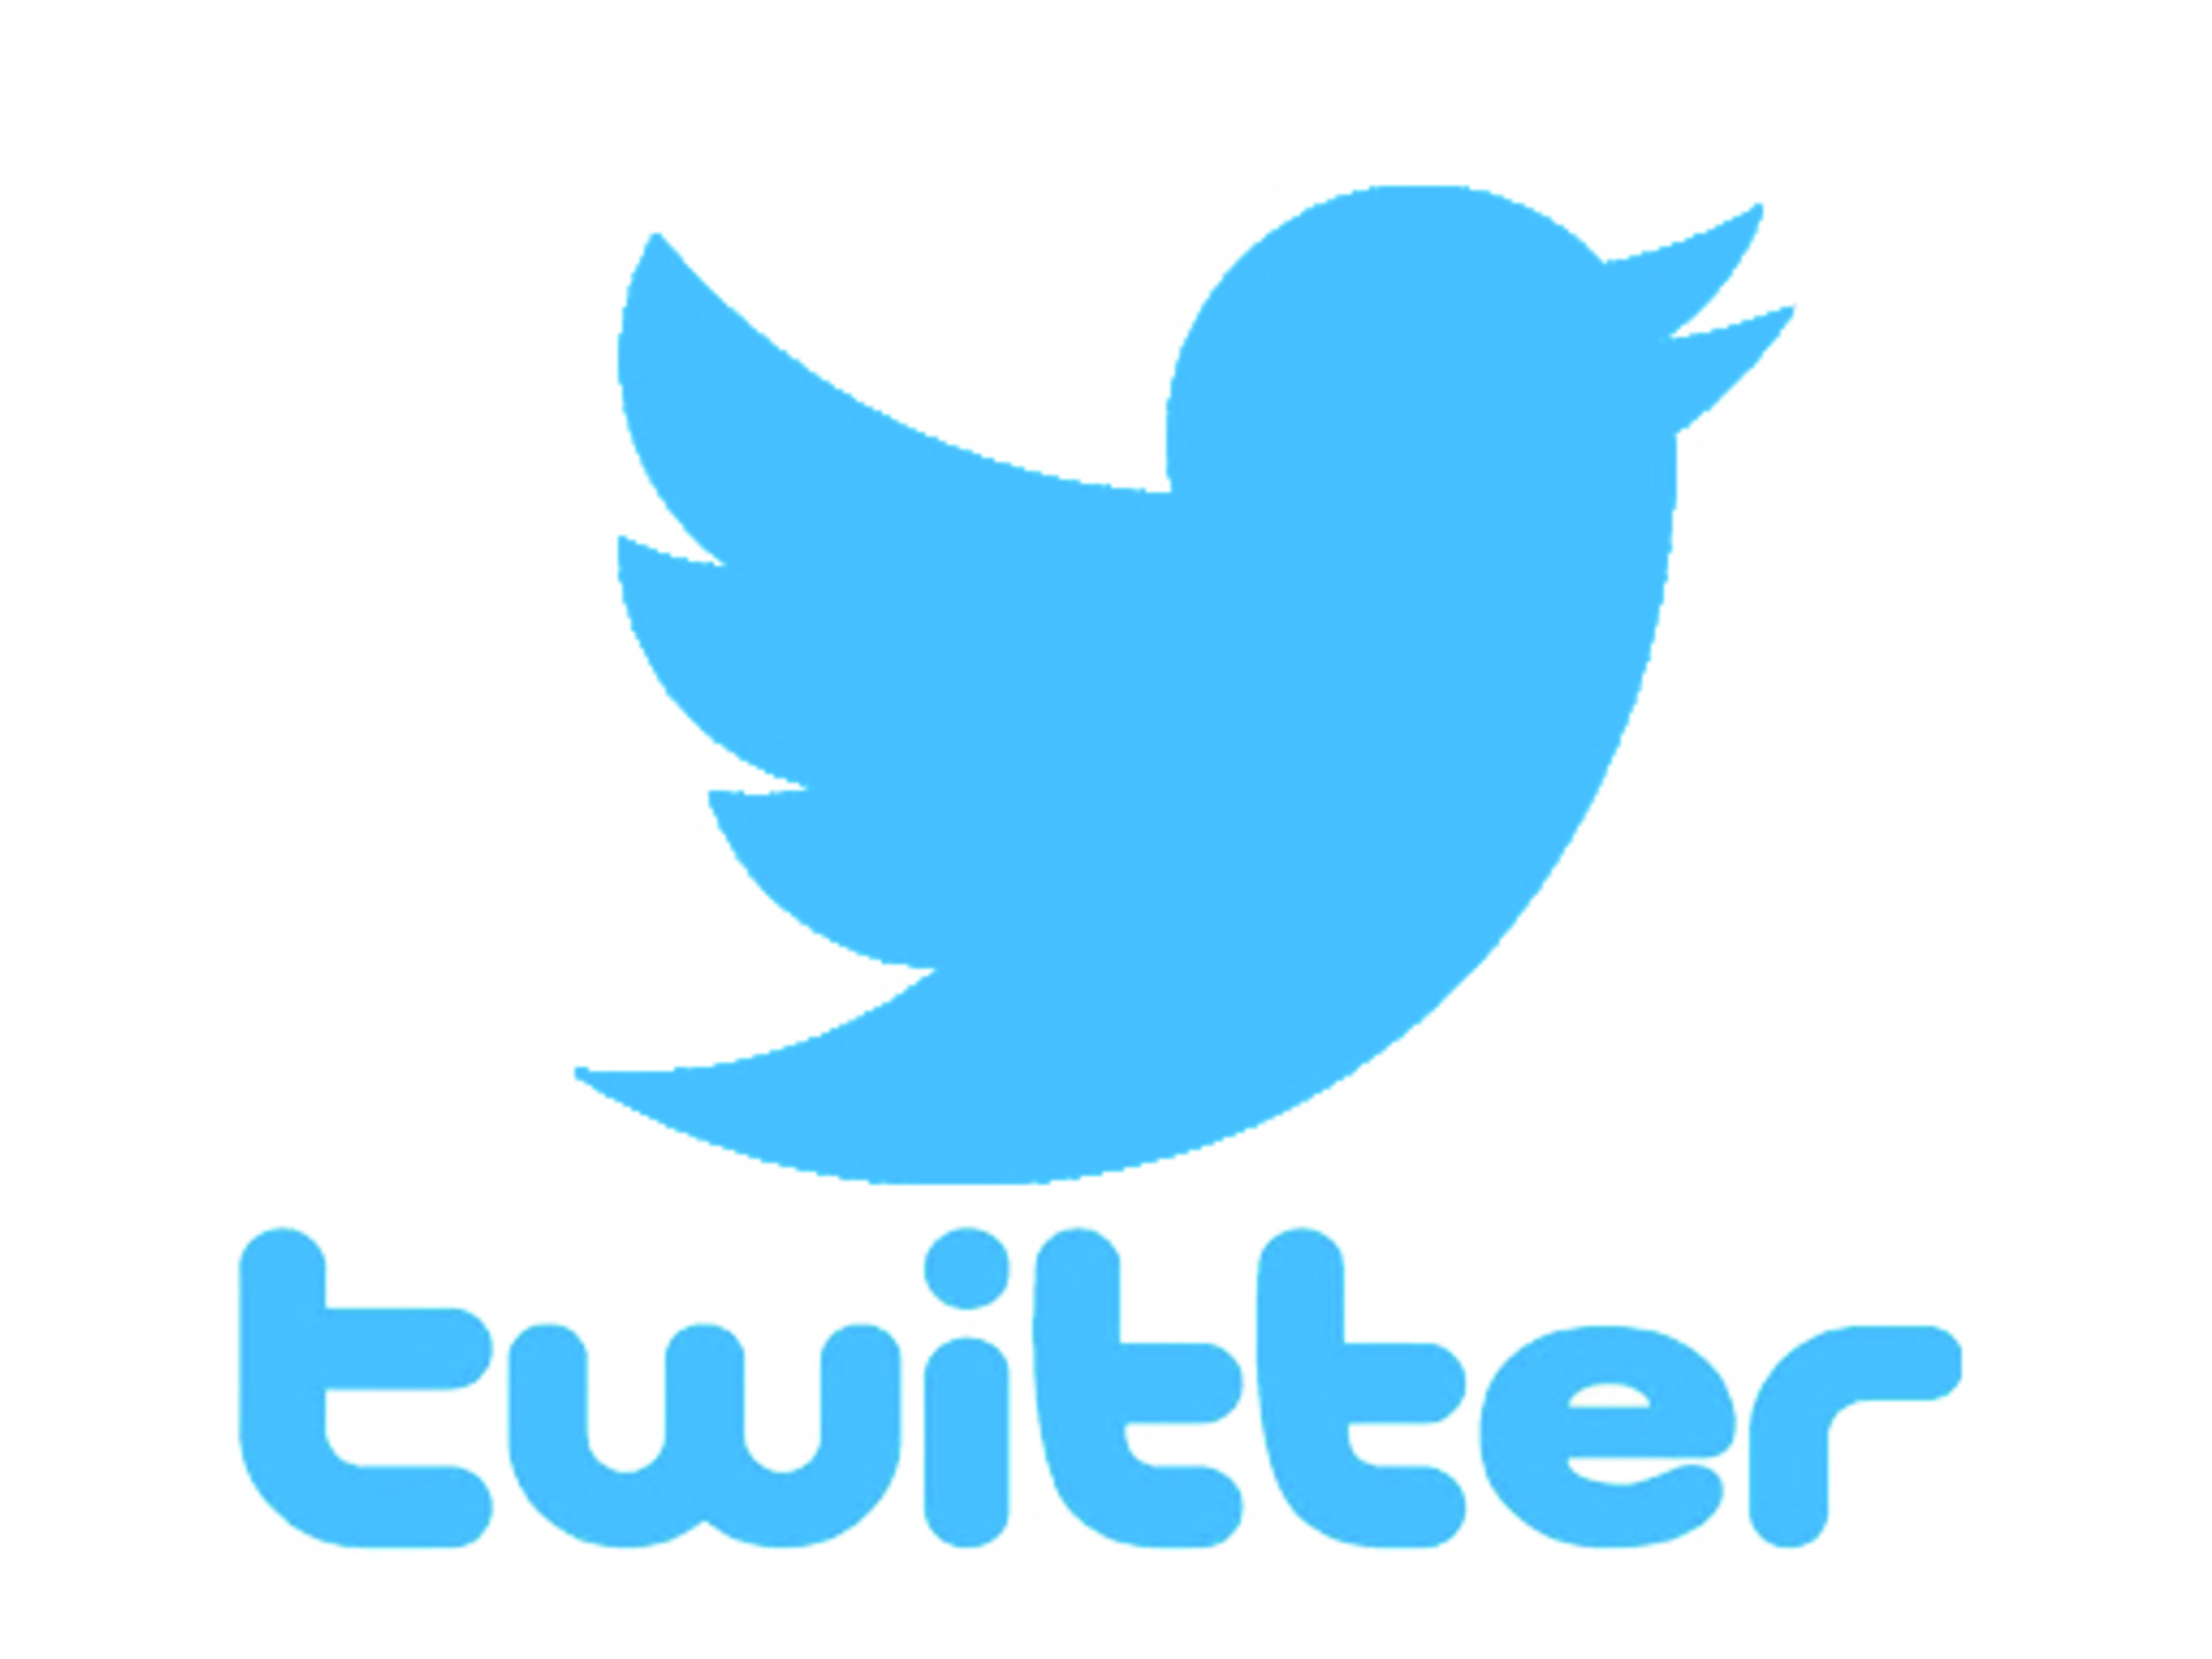 Twitter web. Твиттер. Иконка Твиттер. Twttr. Твиттер лого.